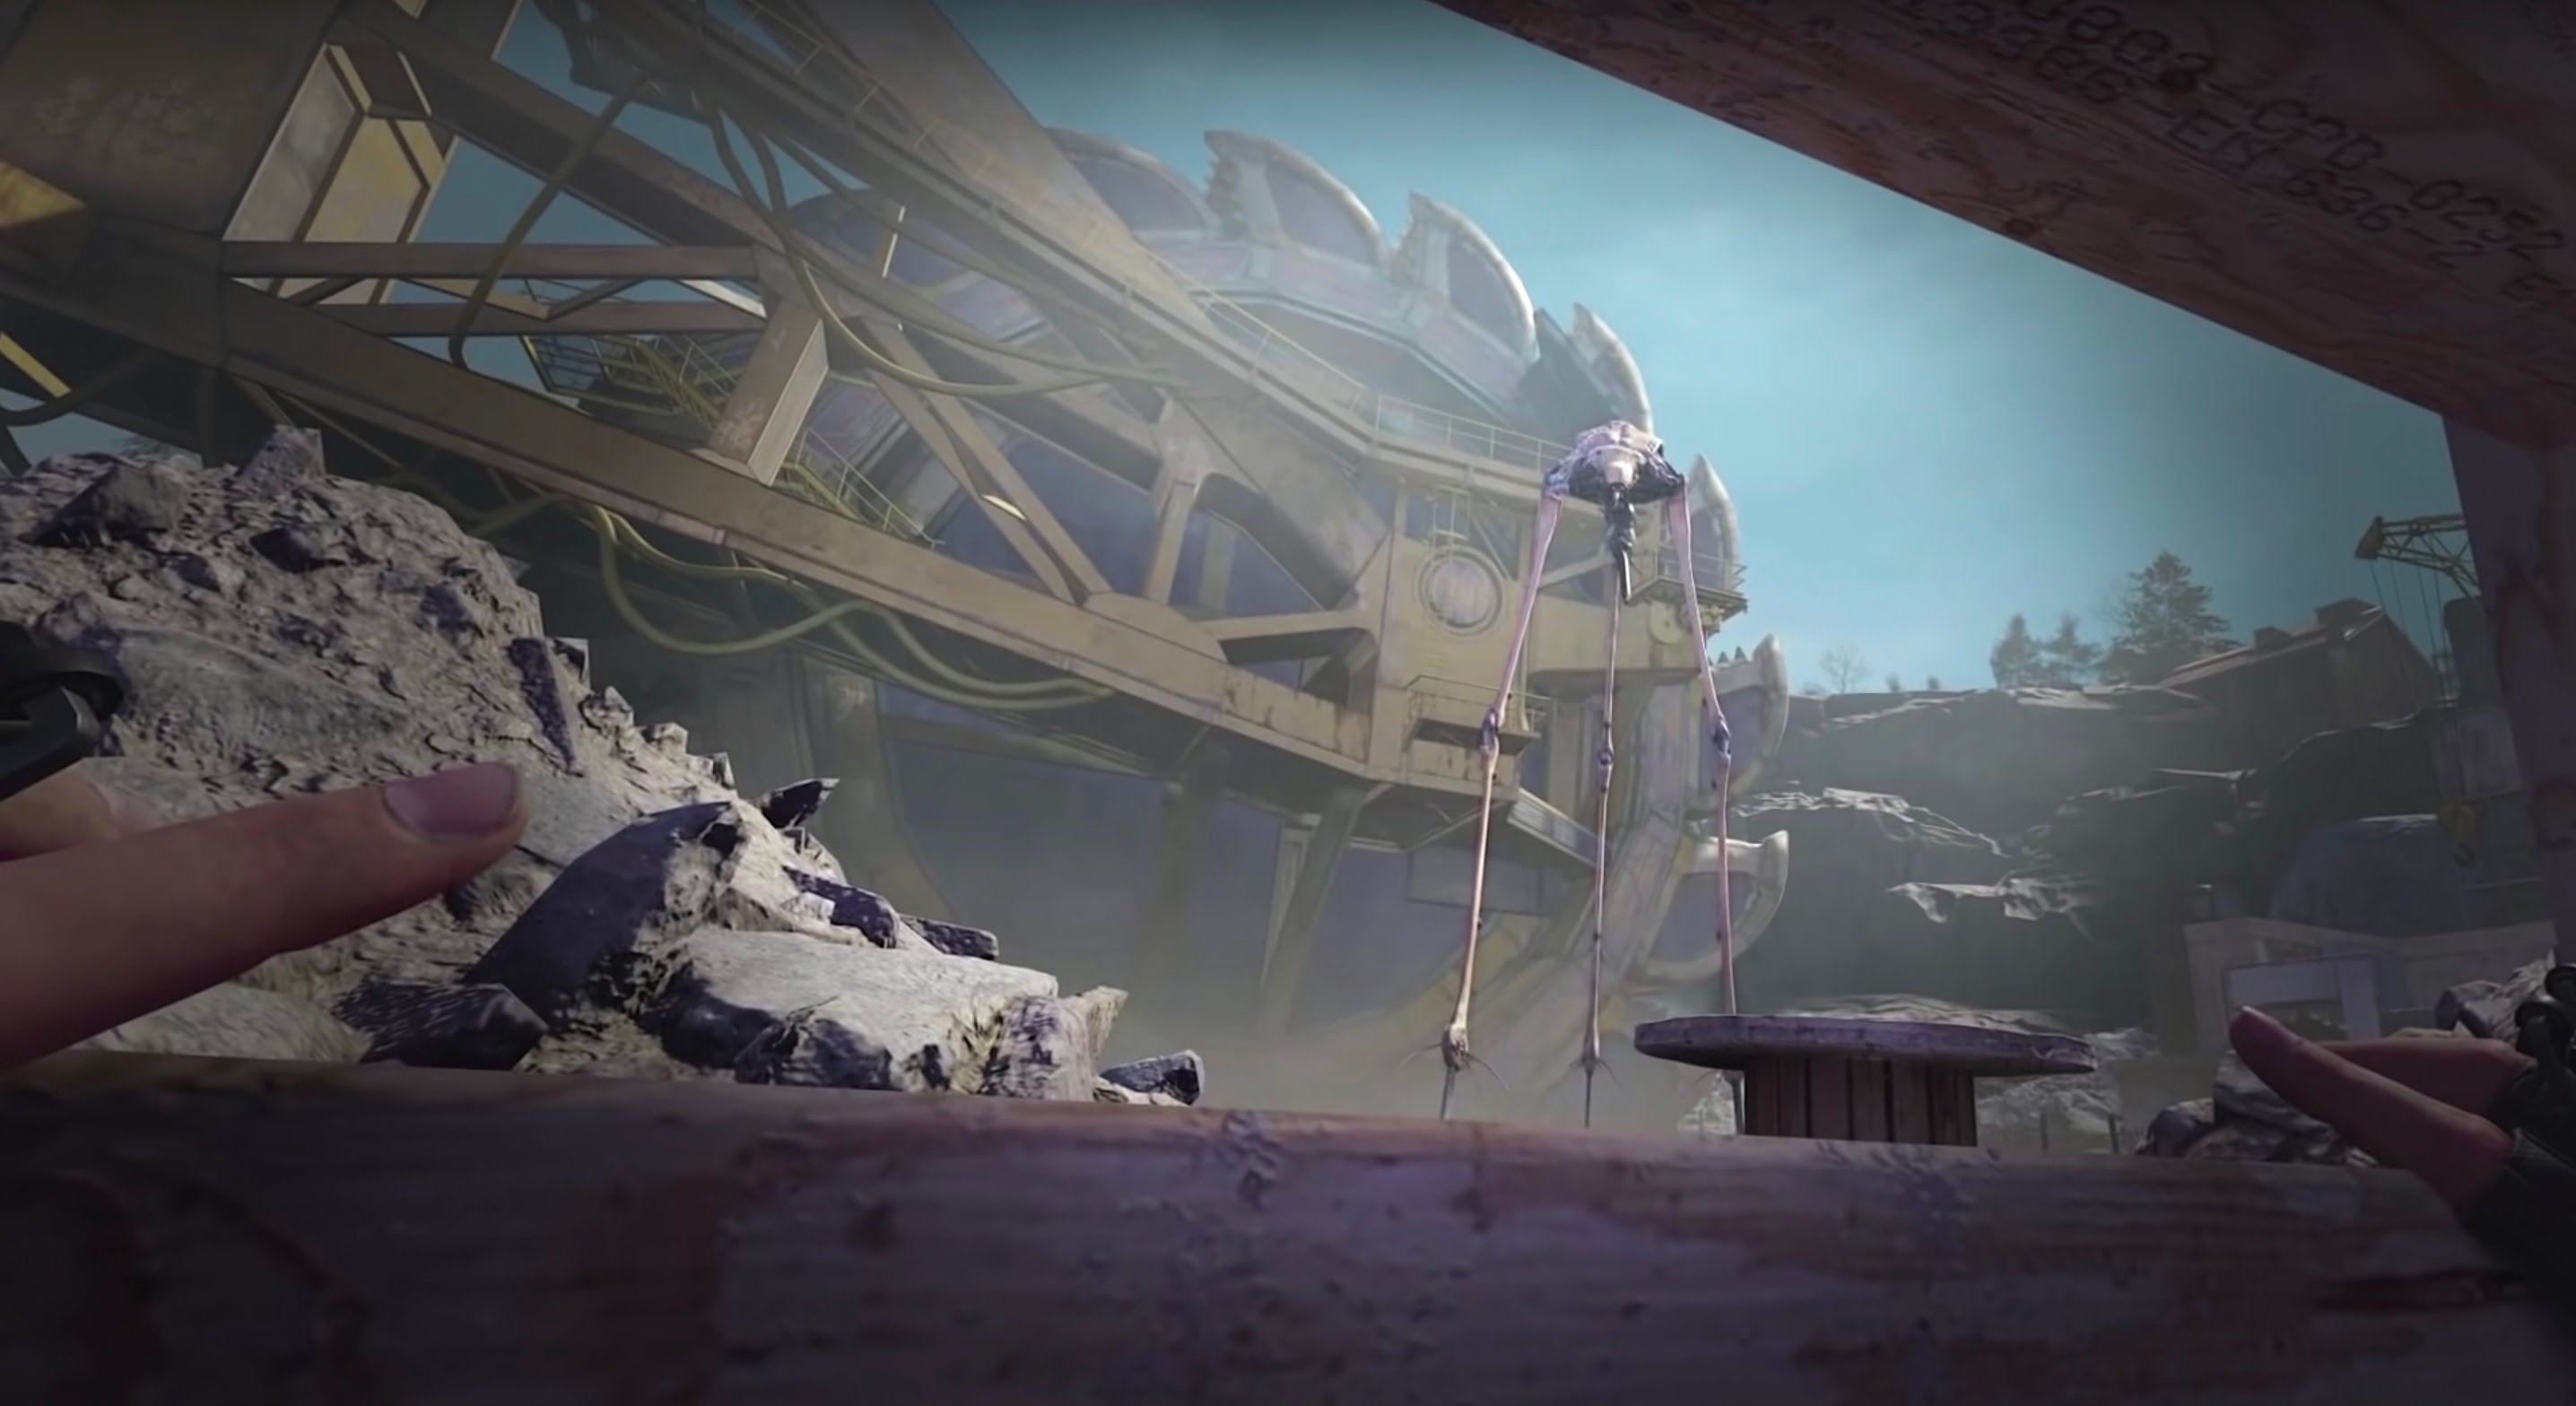 Half-Life:Alyx - Valve-like story mod "Levitation" coming soon